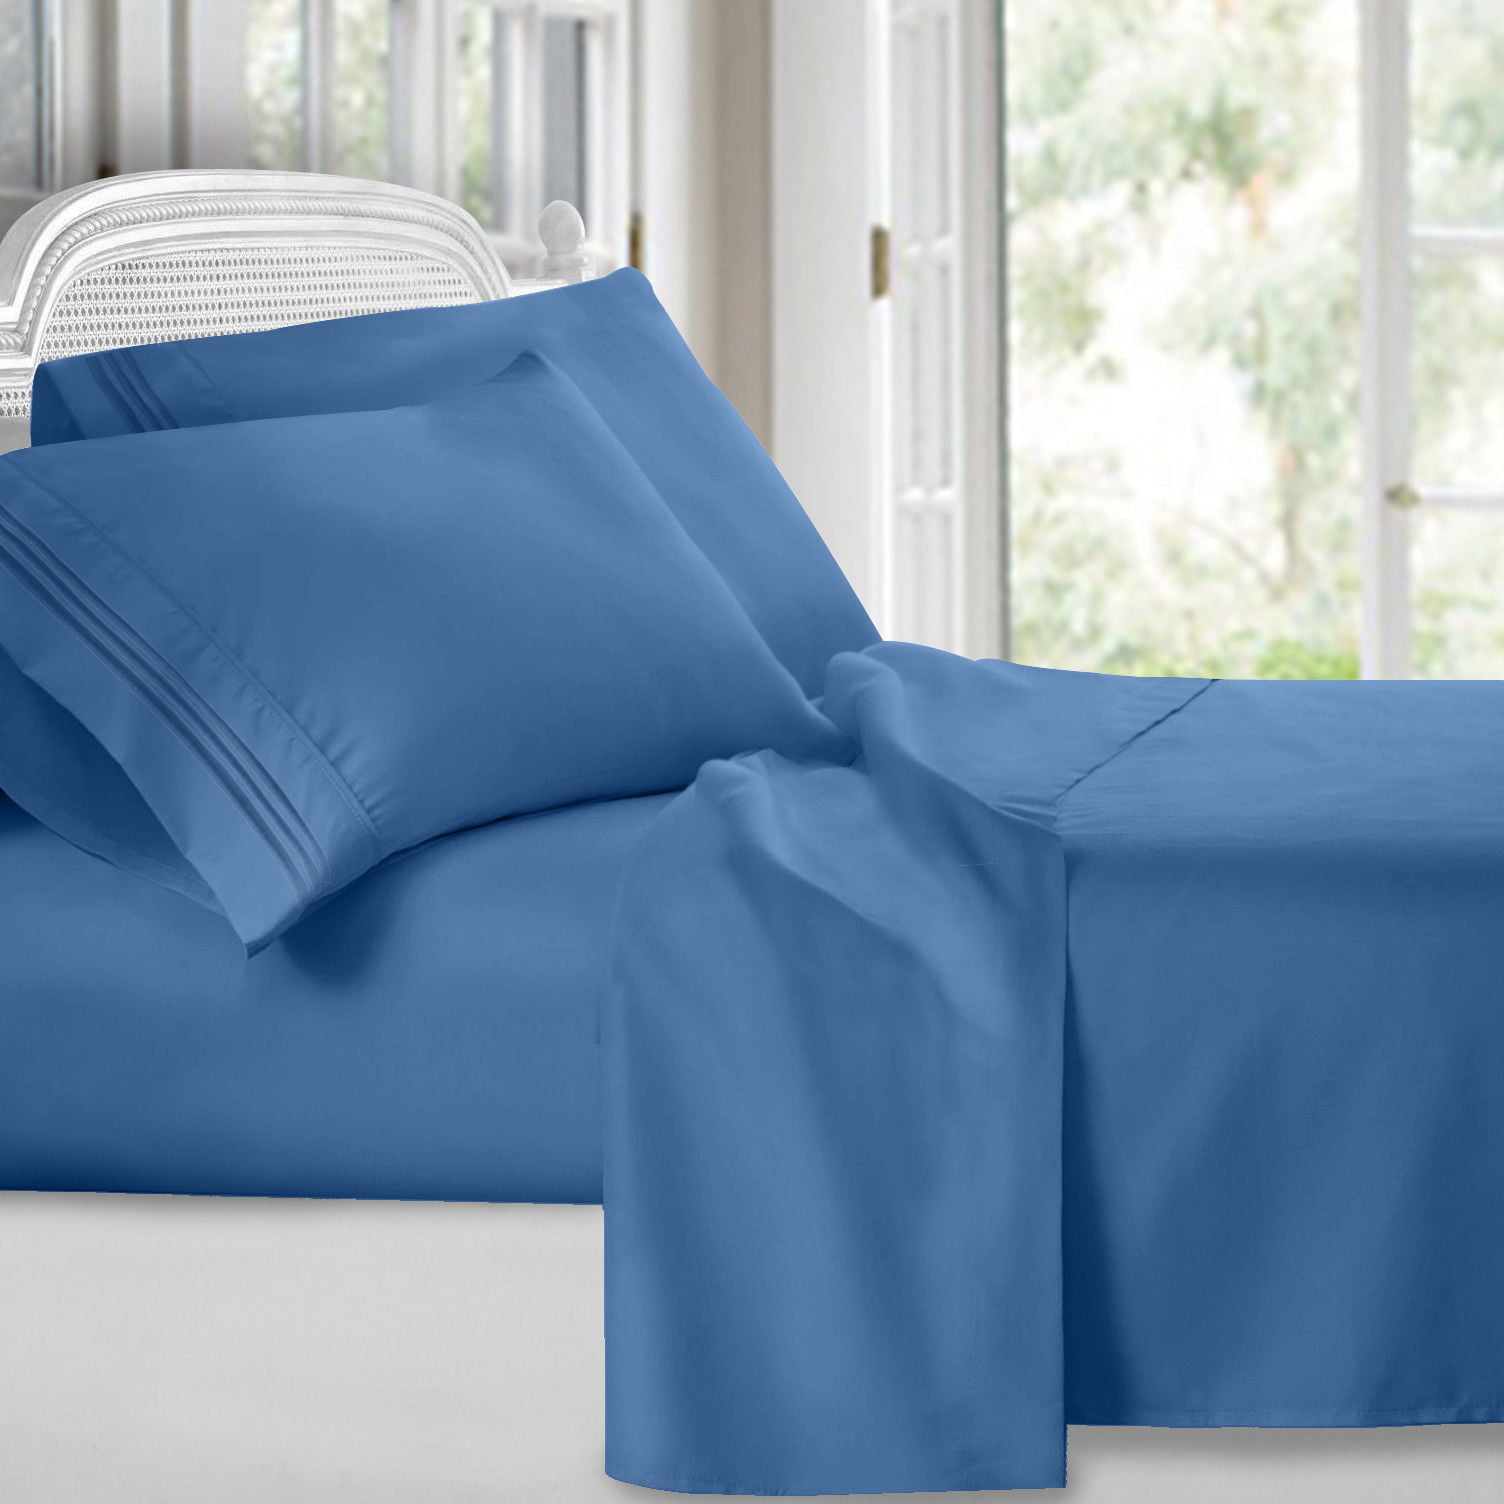 Bed Sheets Cooling Egyptian Comfort 1800 Count 4 Piece Bed Sheet Set Deep Pocket 